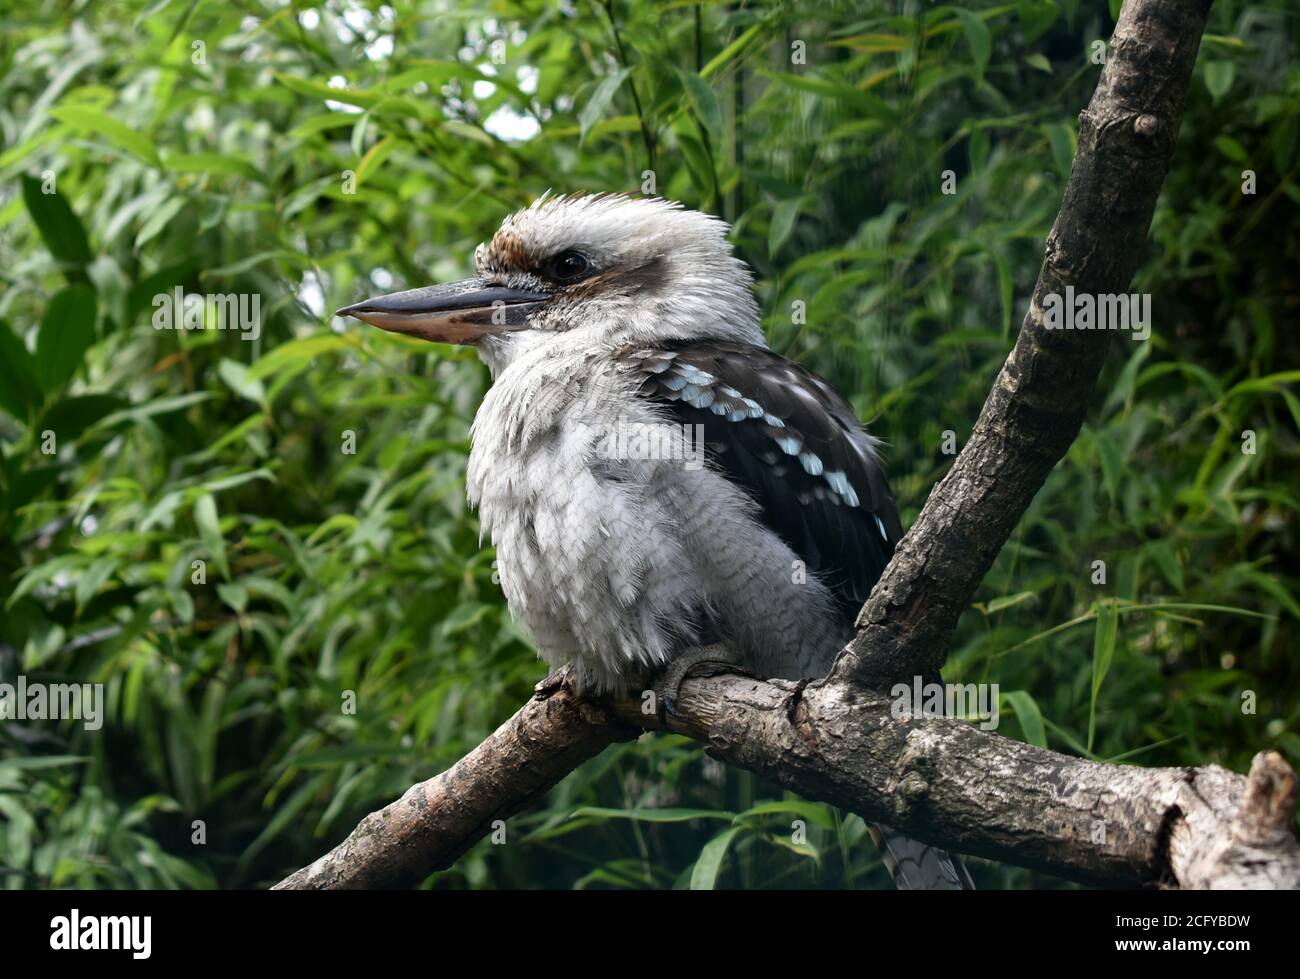 Kookaburra in a tree. Stock Photo